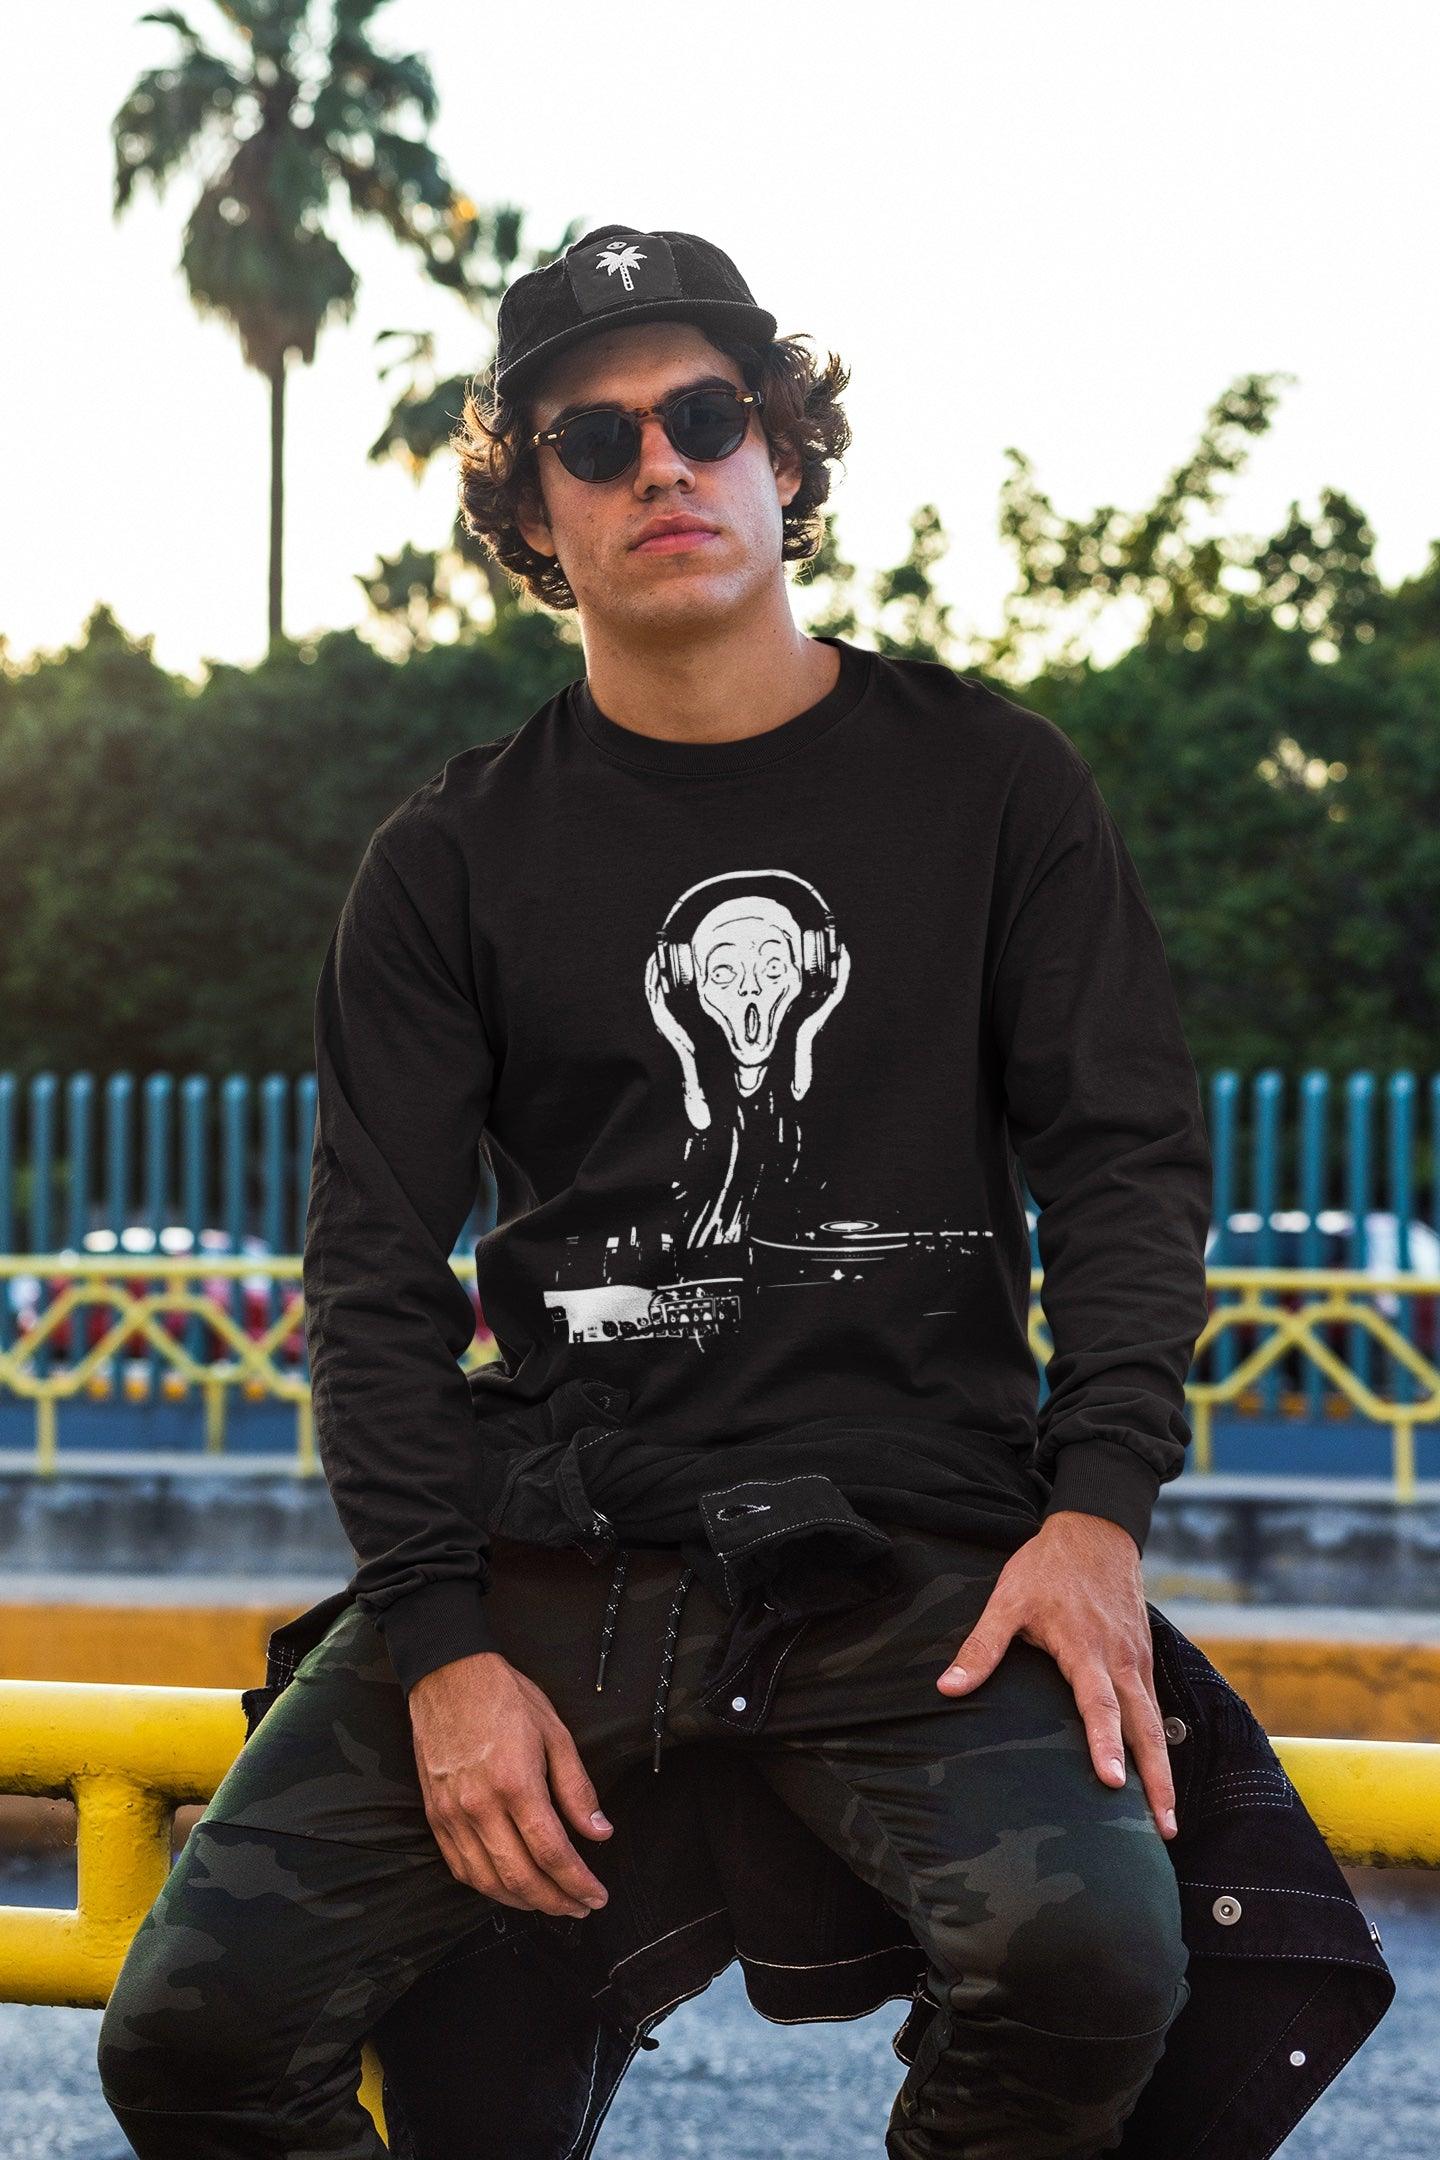 Techno Scream Sweatshirt | Techno Outfit